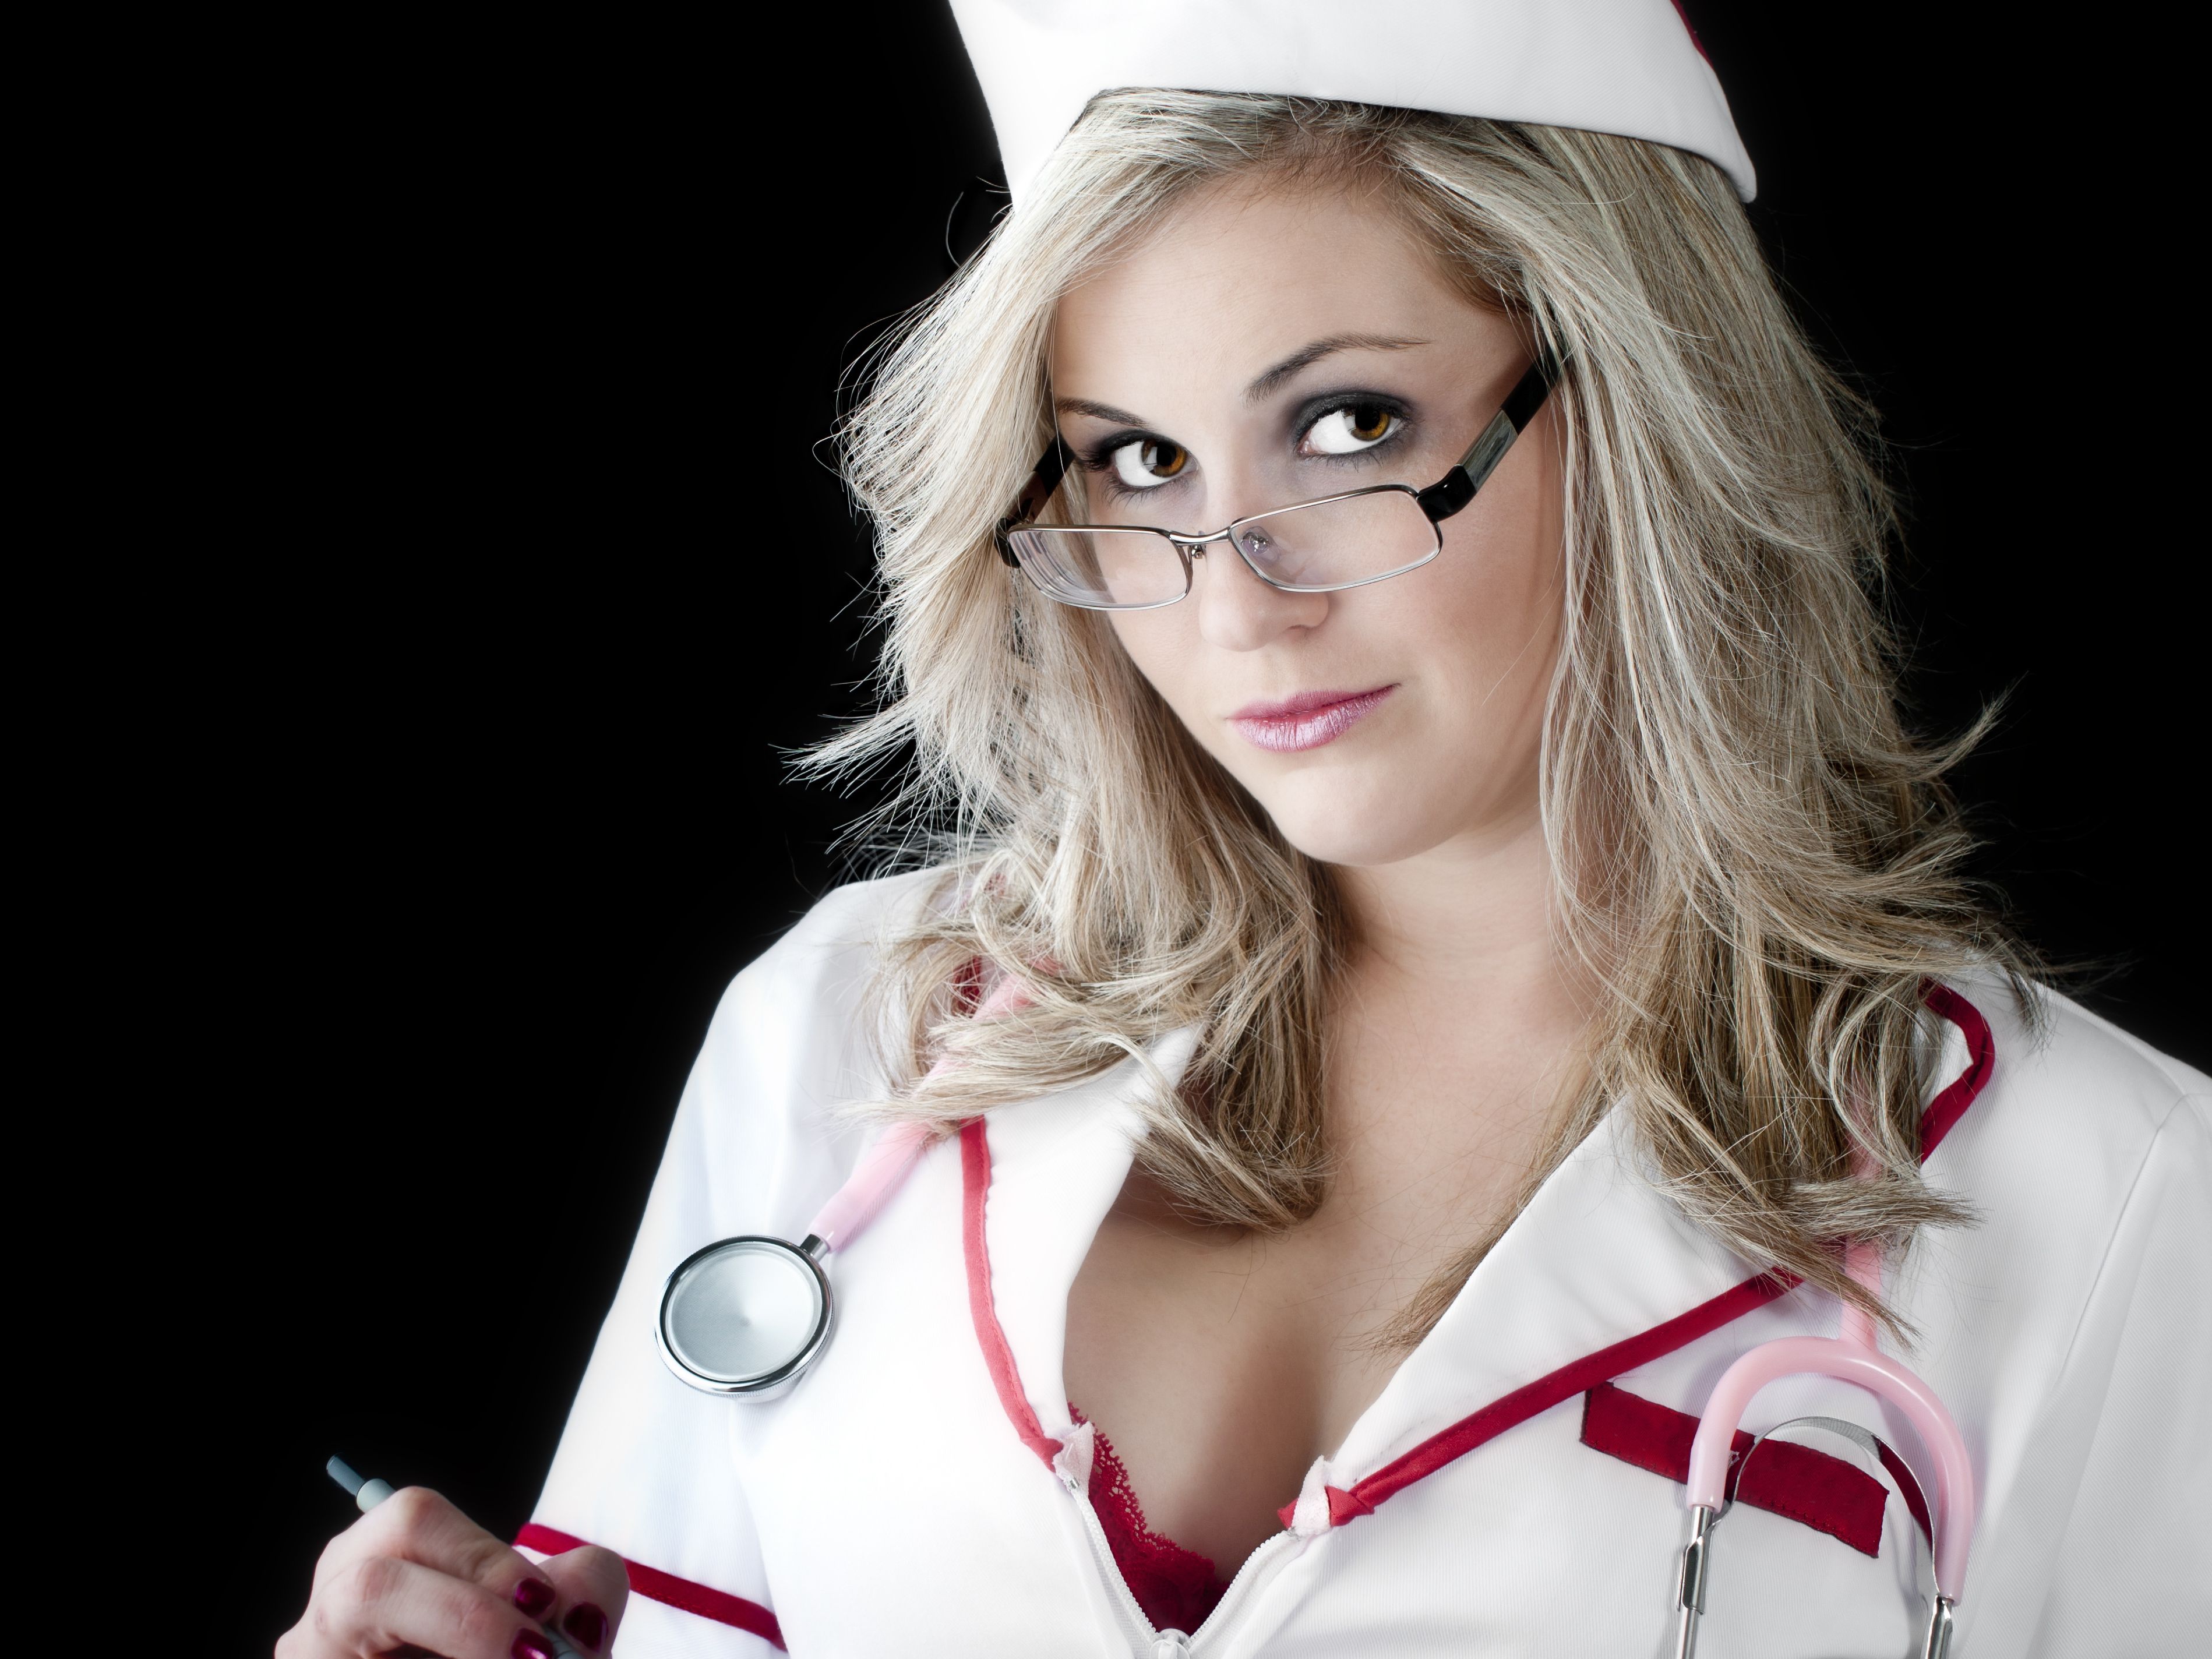 Hot nurse onlyfans